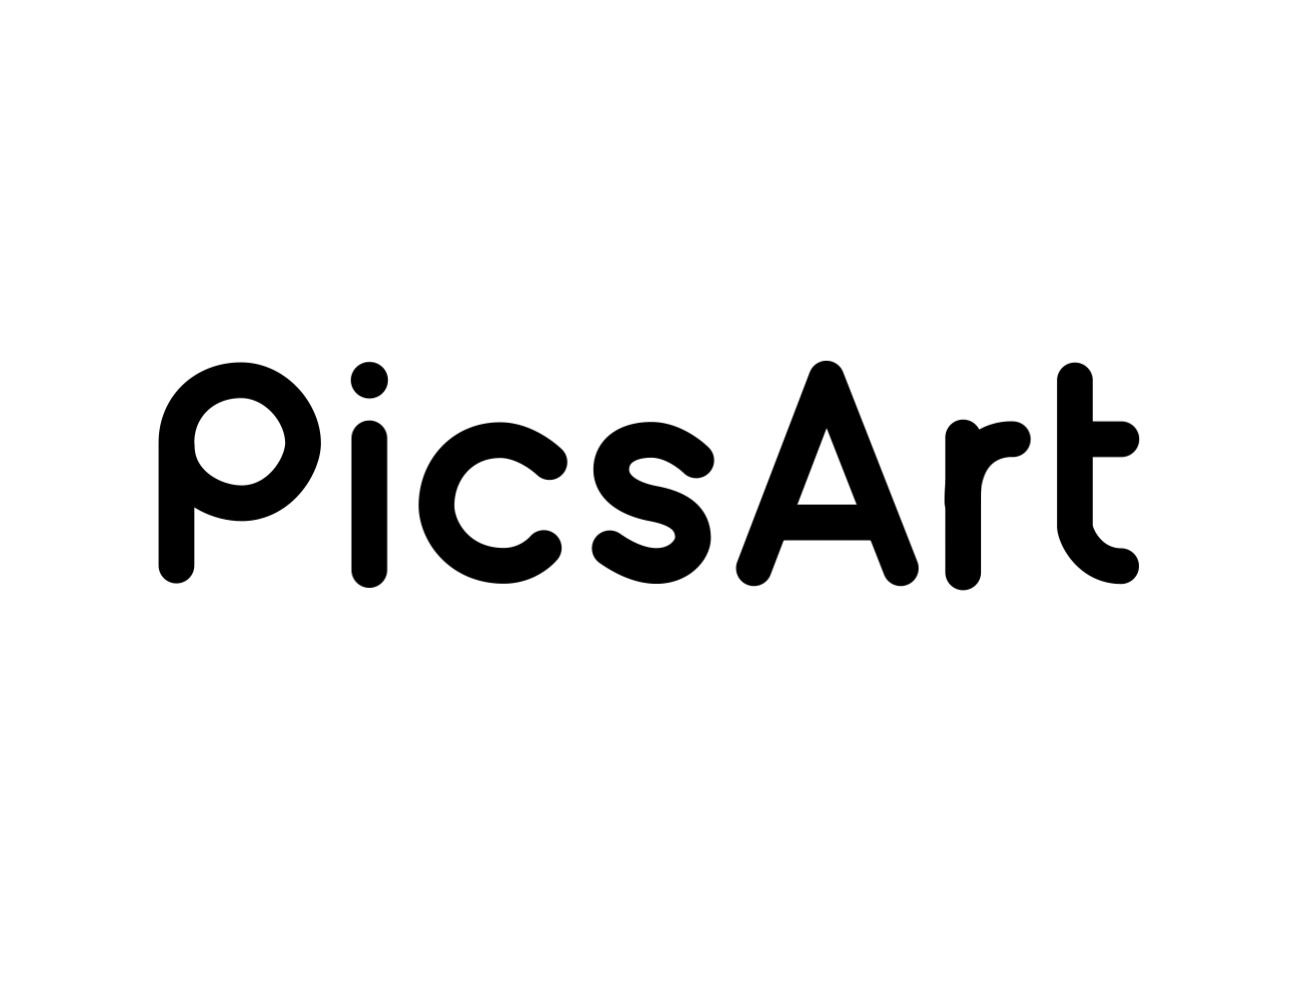 new picsart logo animation showing evolution of picsart logo change